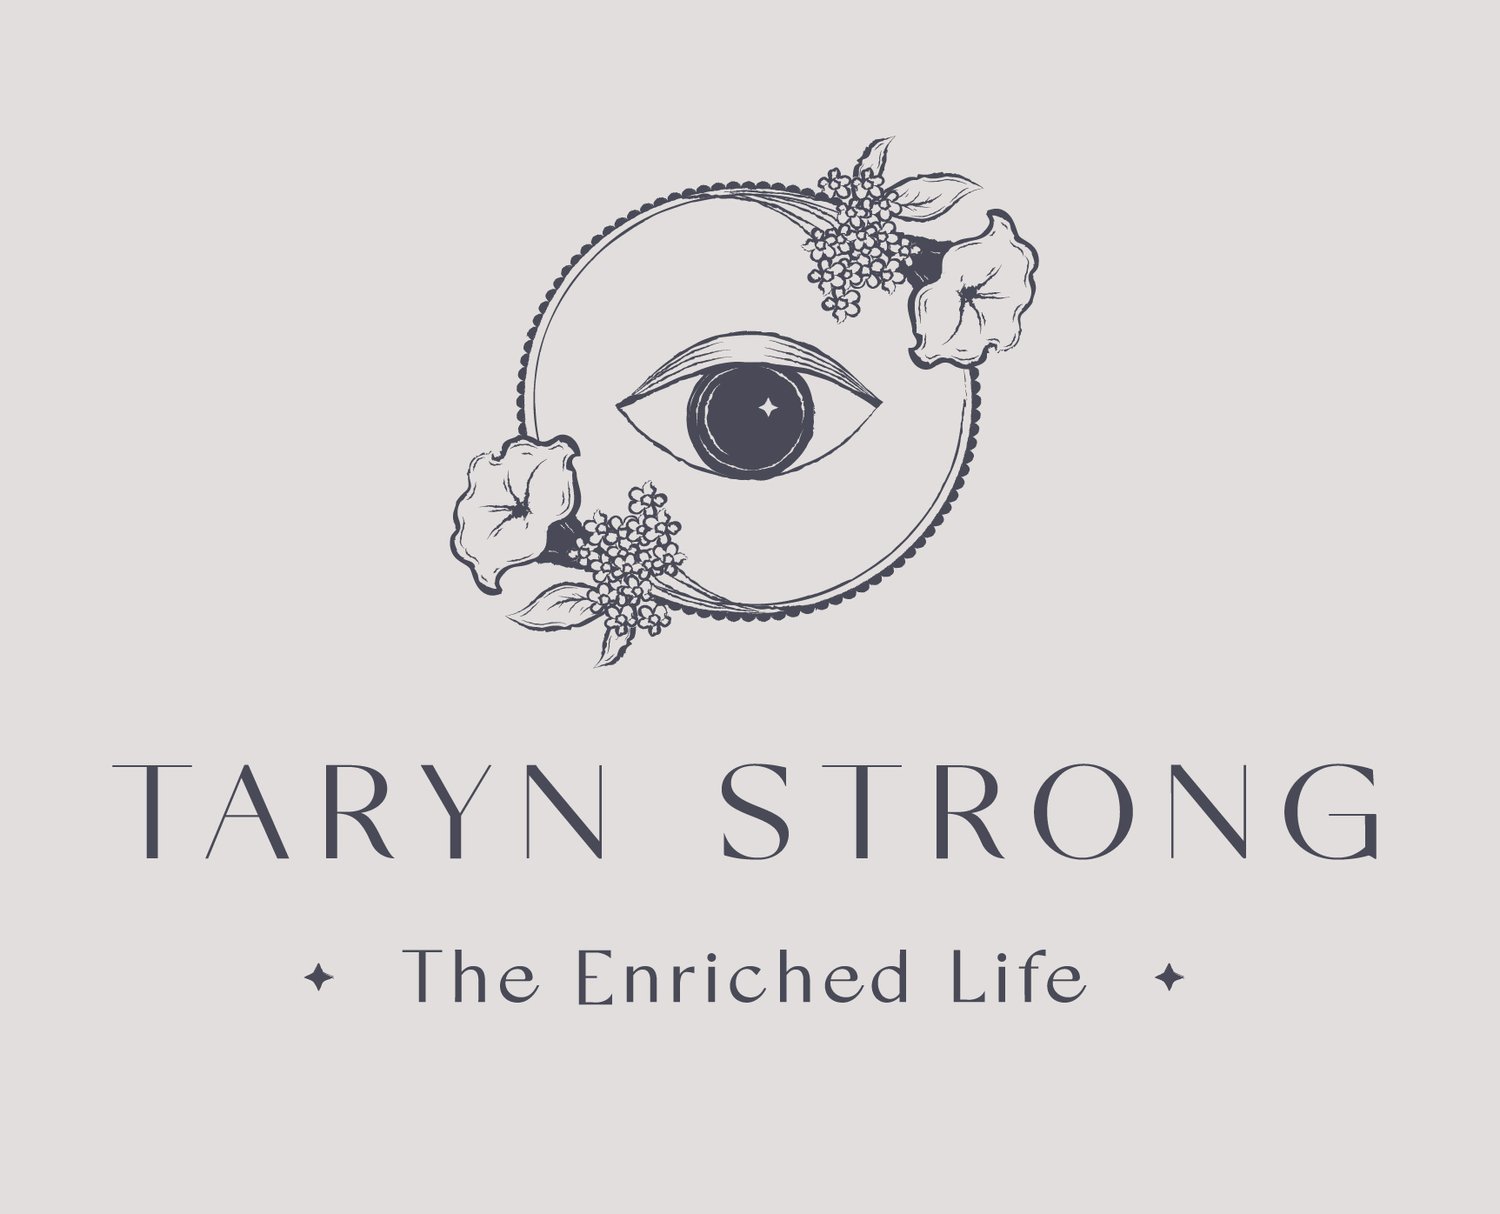 Taryn Strong